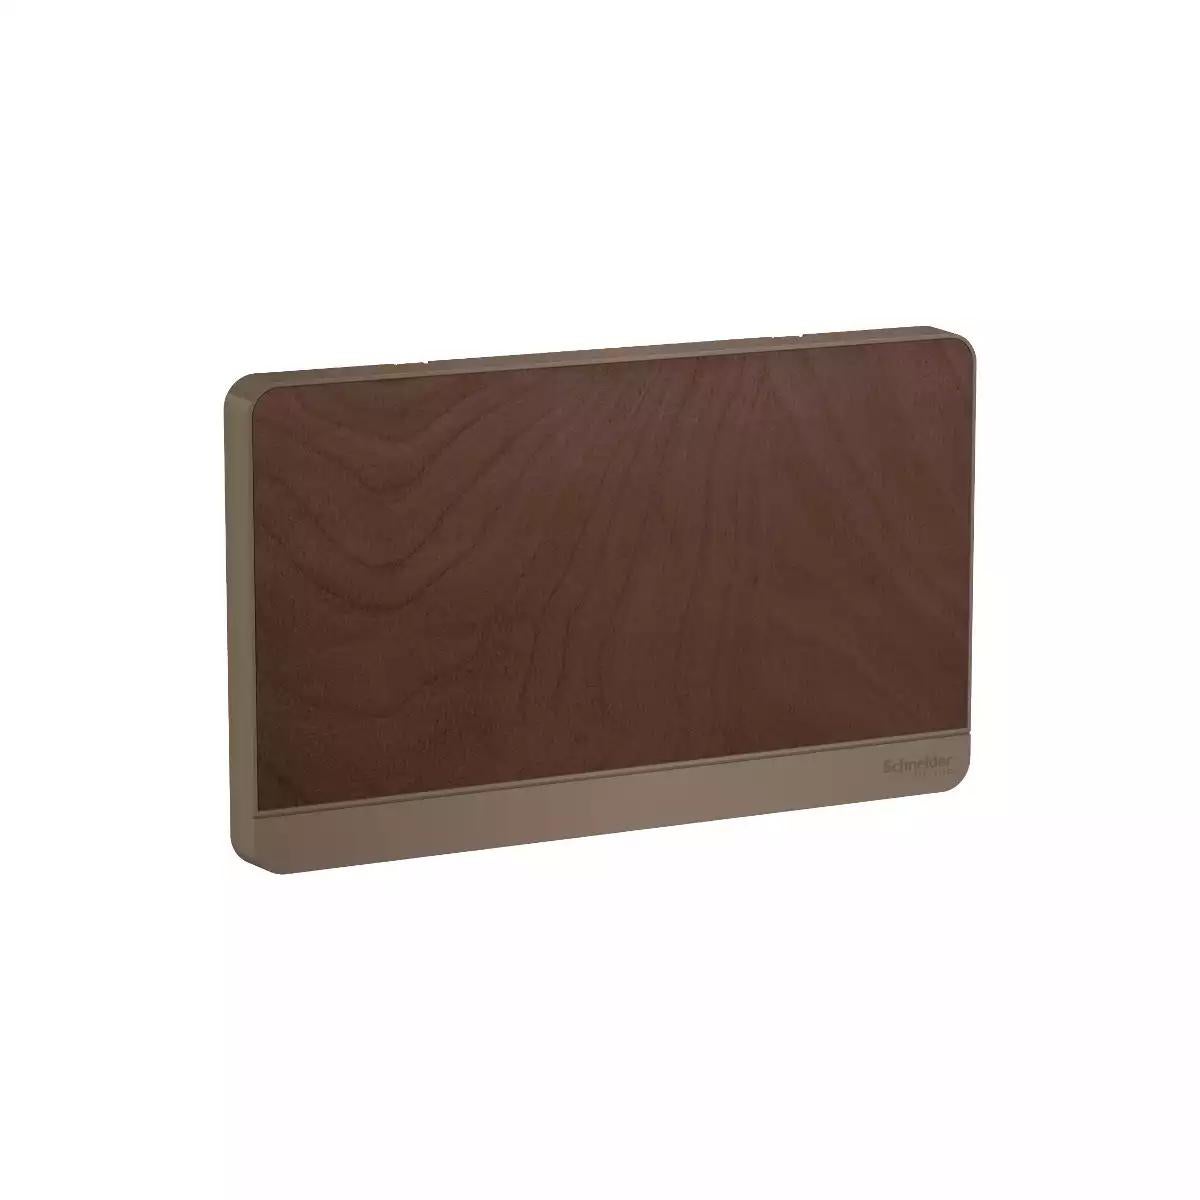 AvatarOn, 2G Blank Plate, Wood